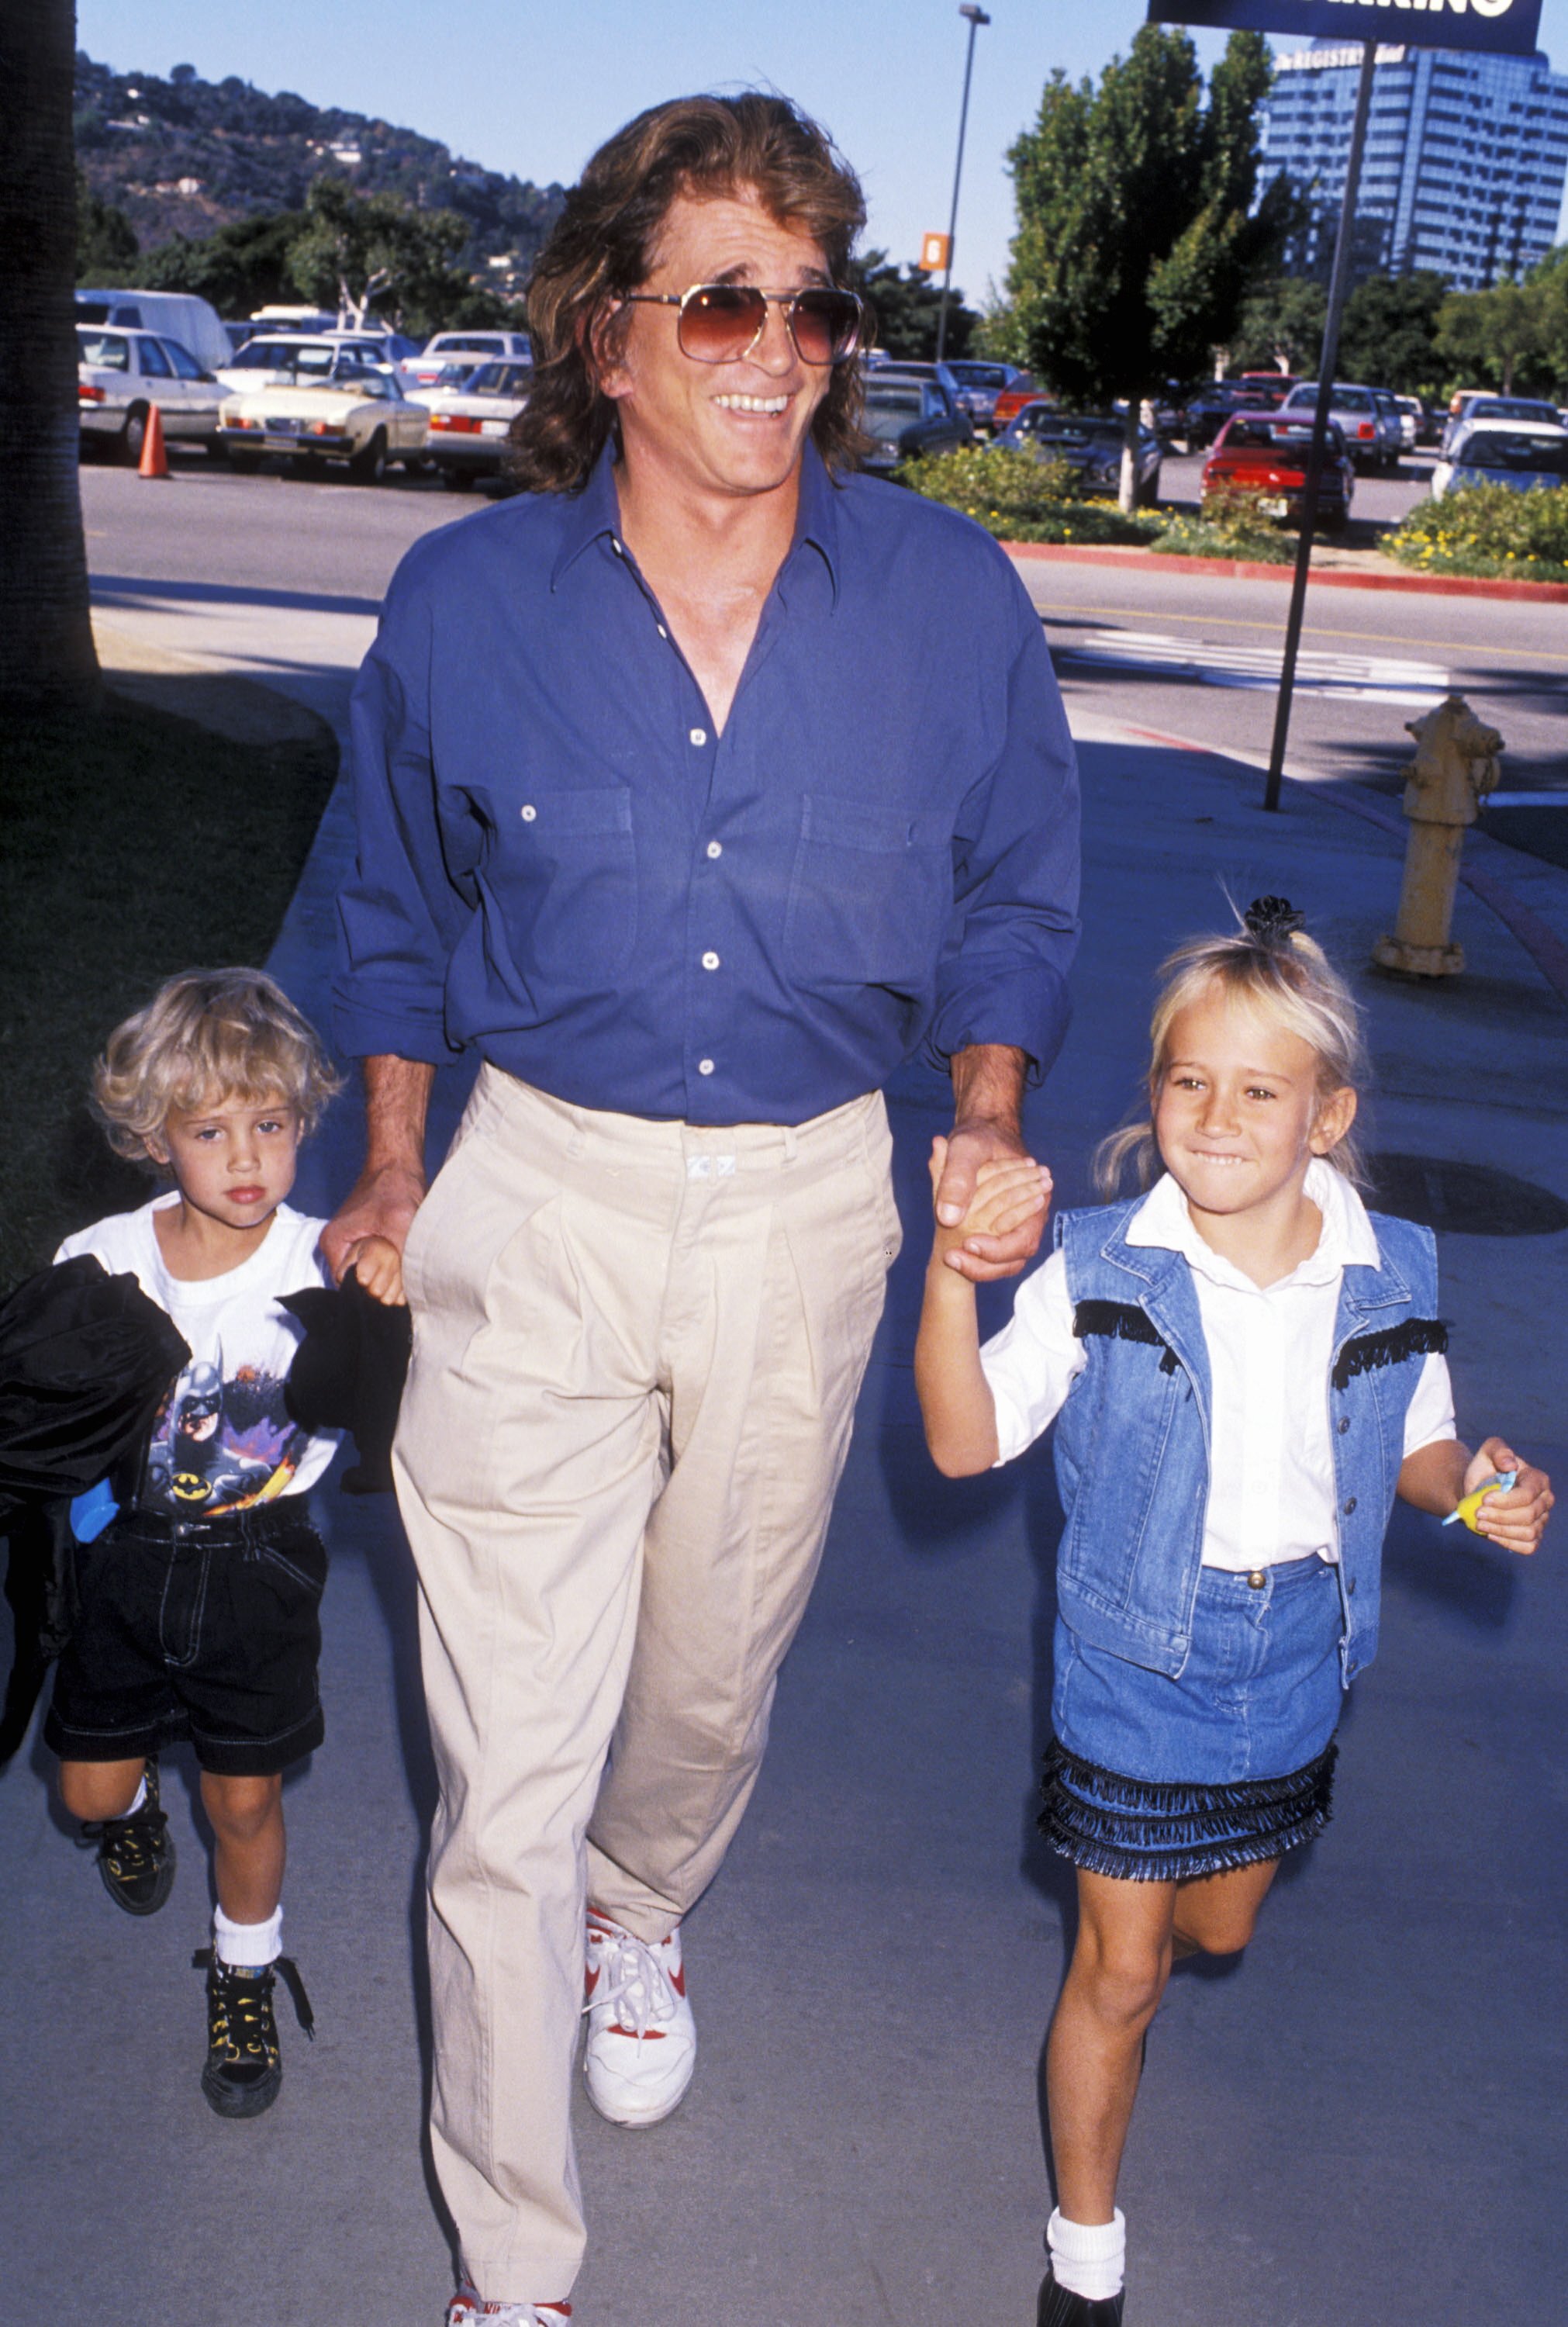 Michael Landon, son Sean Landon, and daughter Jennifer Landon attend "The Wizard" Universal City Premiere on December 2, 1989, at Cineplex Odeon Universal City Cinemas in Universal City, California. | Source: Getty Images